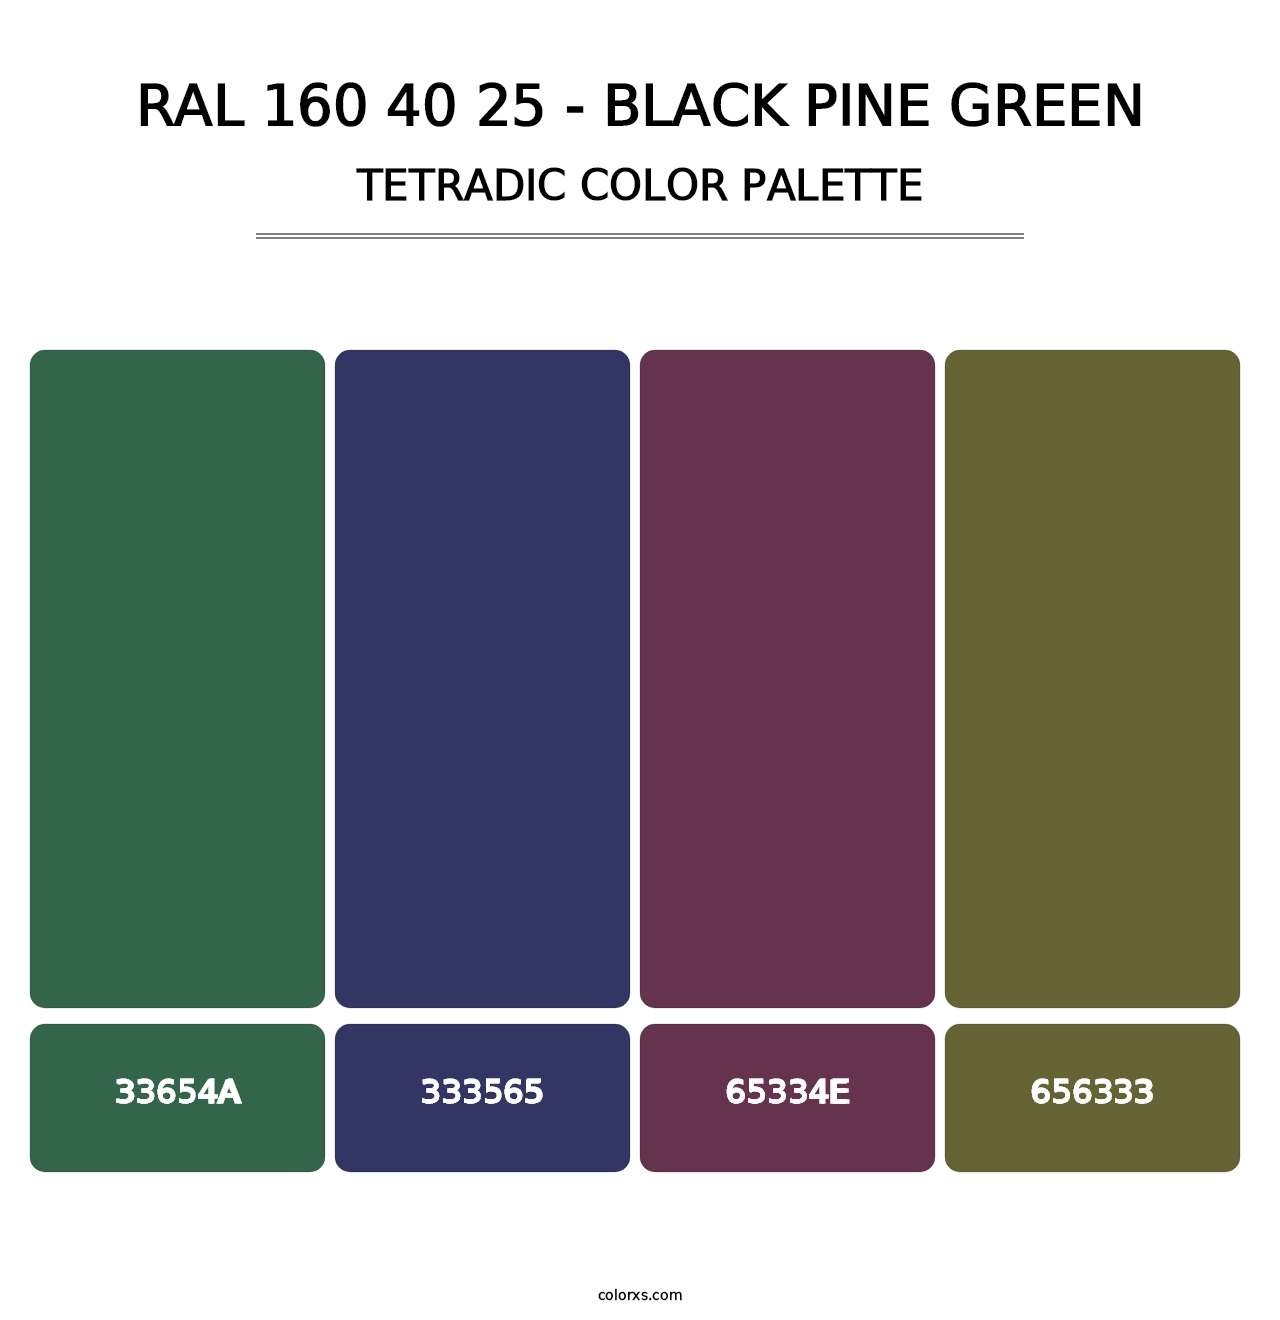 RAL 160 40 25 - Black Pine Green - Tetradic Color Palette